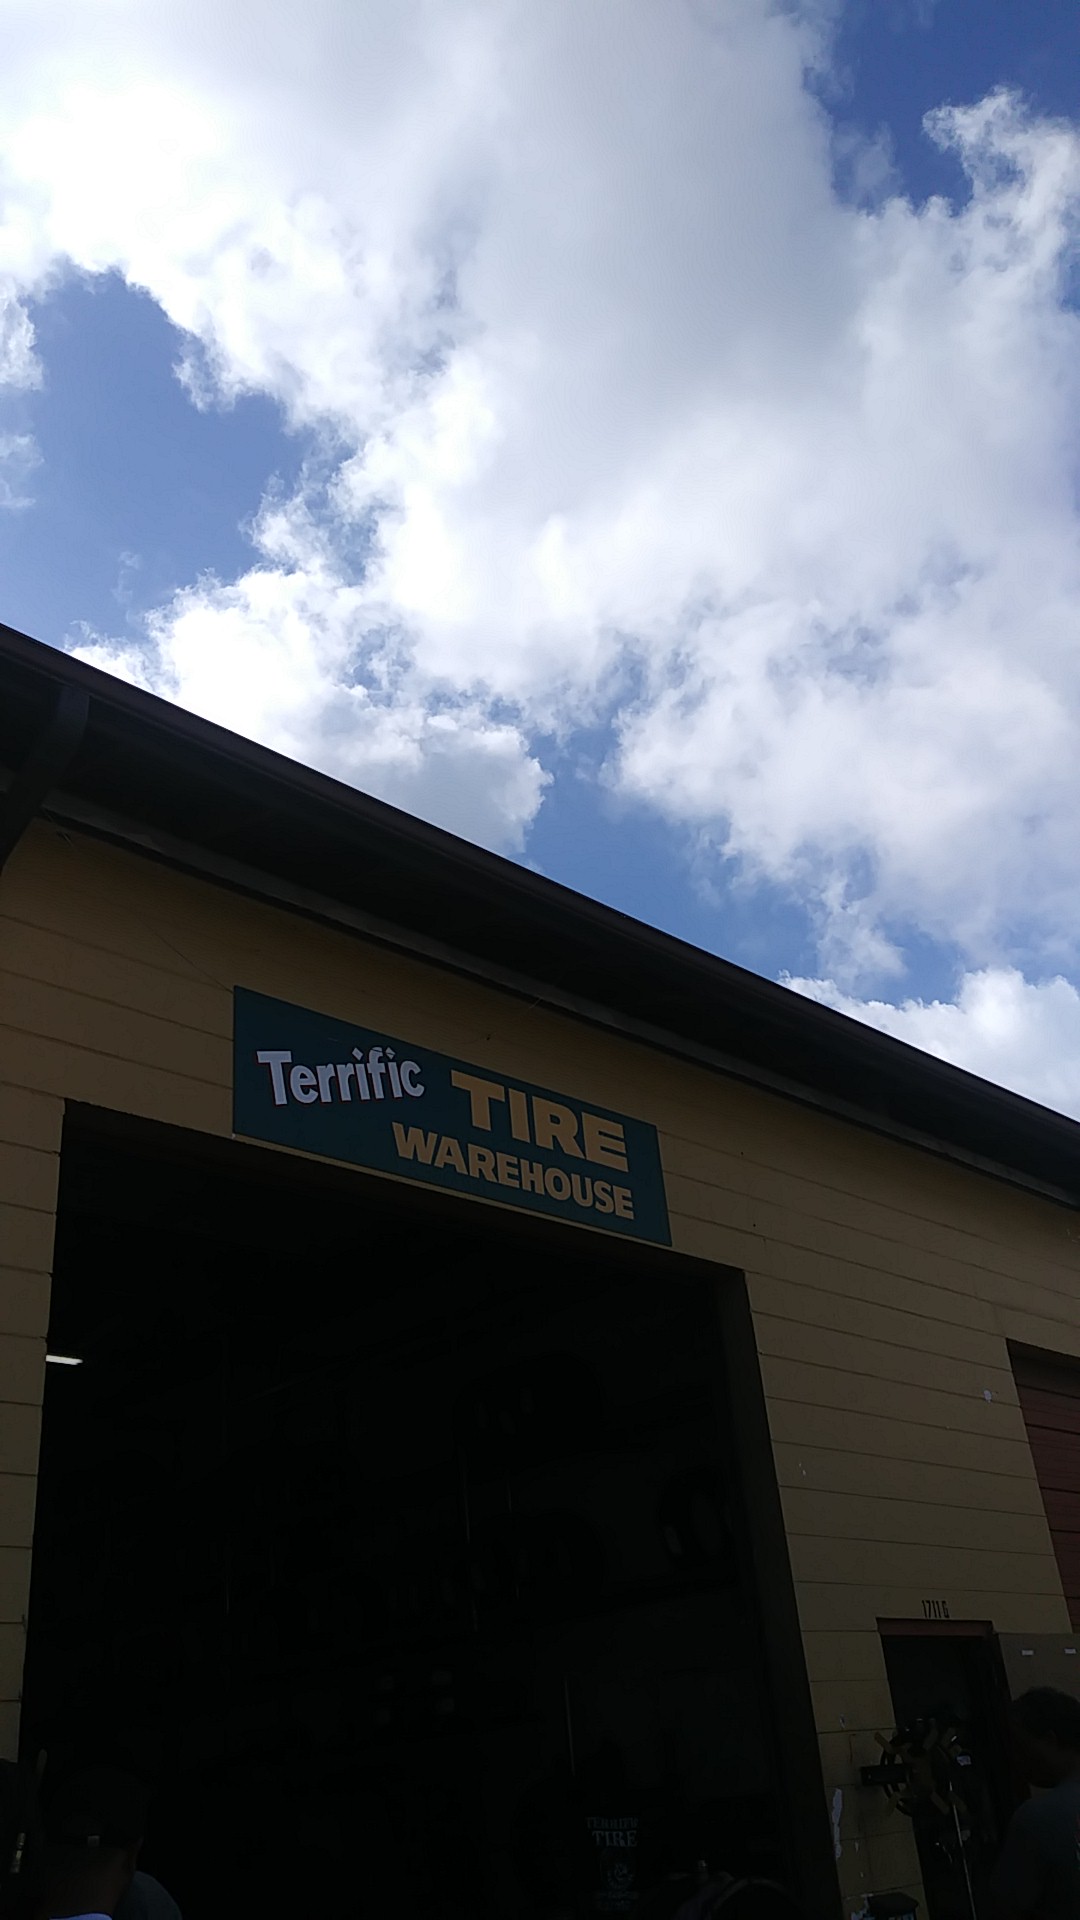 Terrific Tire Warehouse